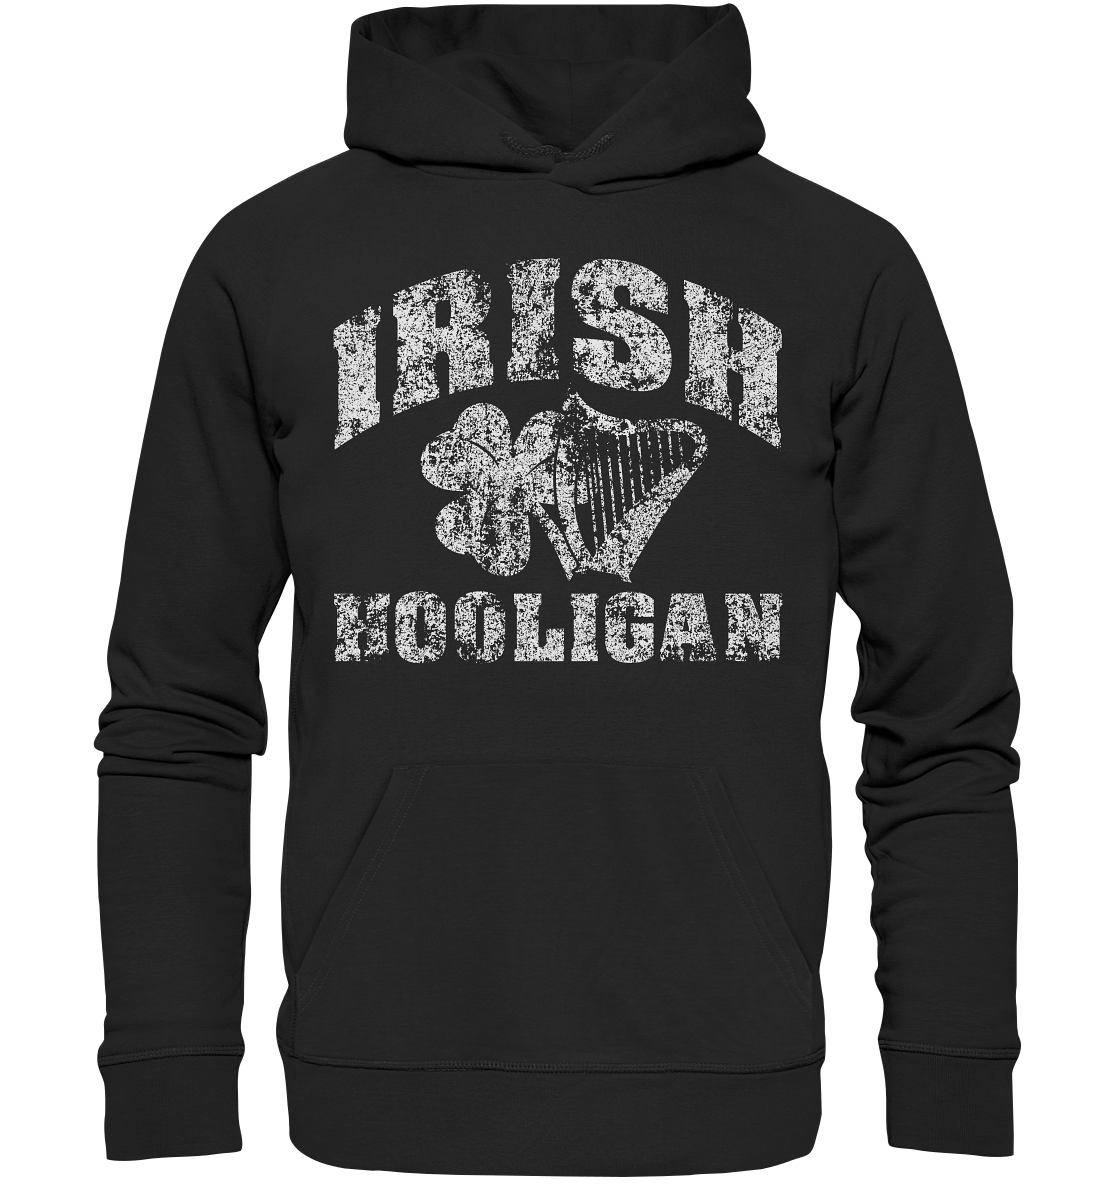 "Irish Hooligan" - Premium Unisex Hoodie